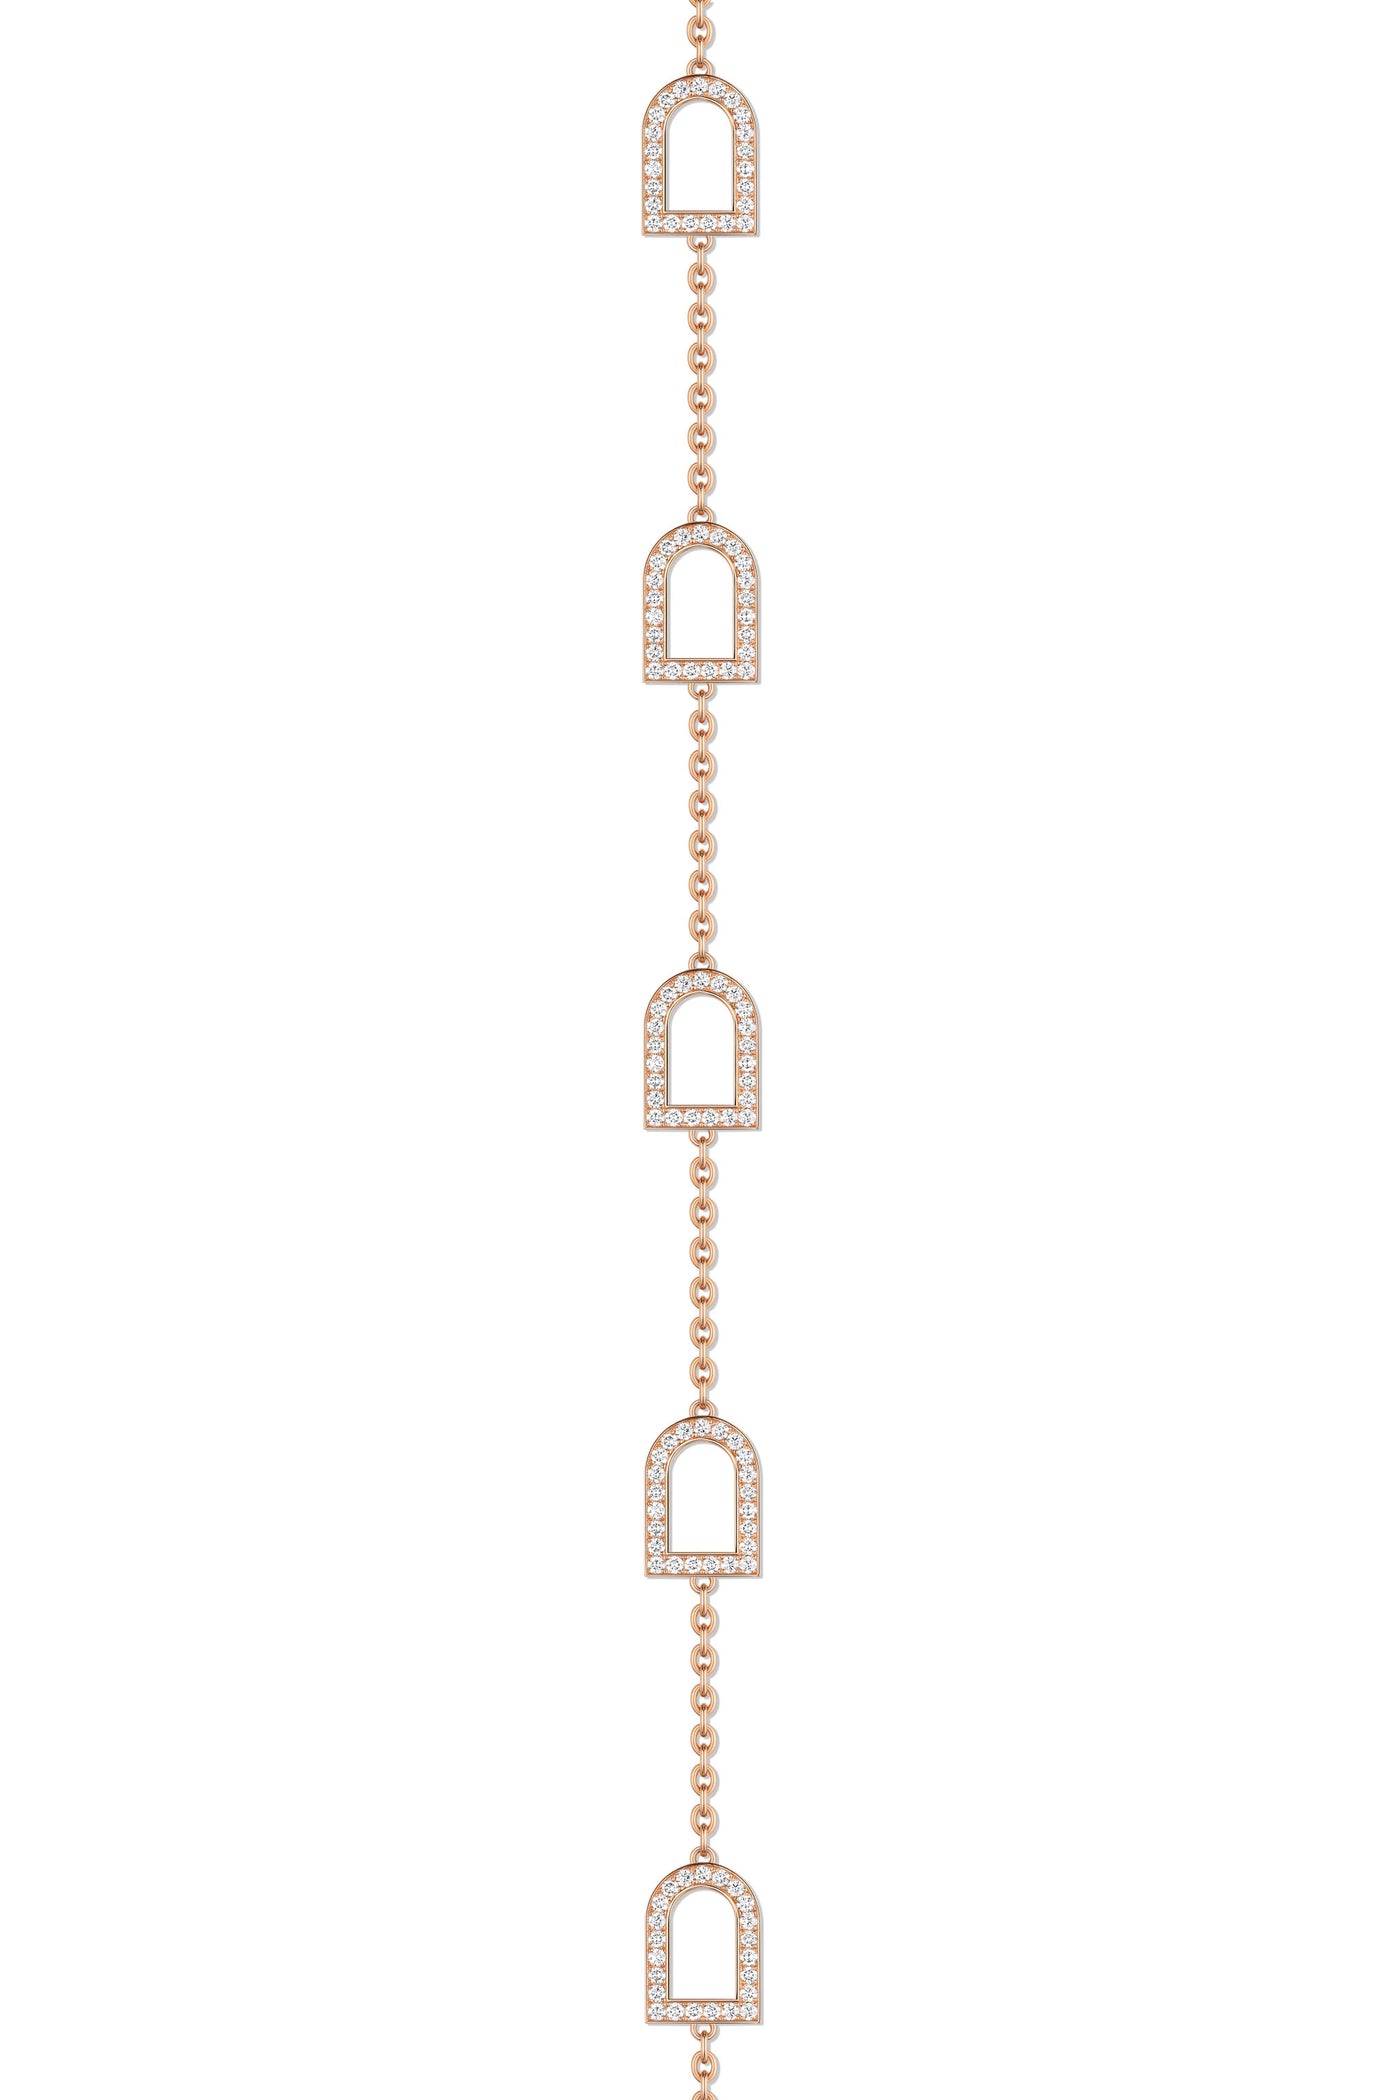 L'Arc Voyage Sautoir, 18K Rose Gold with 20 GM Arch Motifs with Galerie Diamonds - DAVIDOR